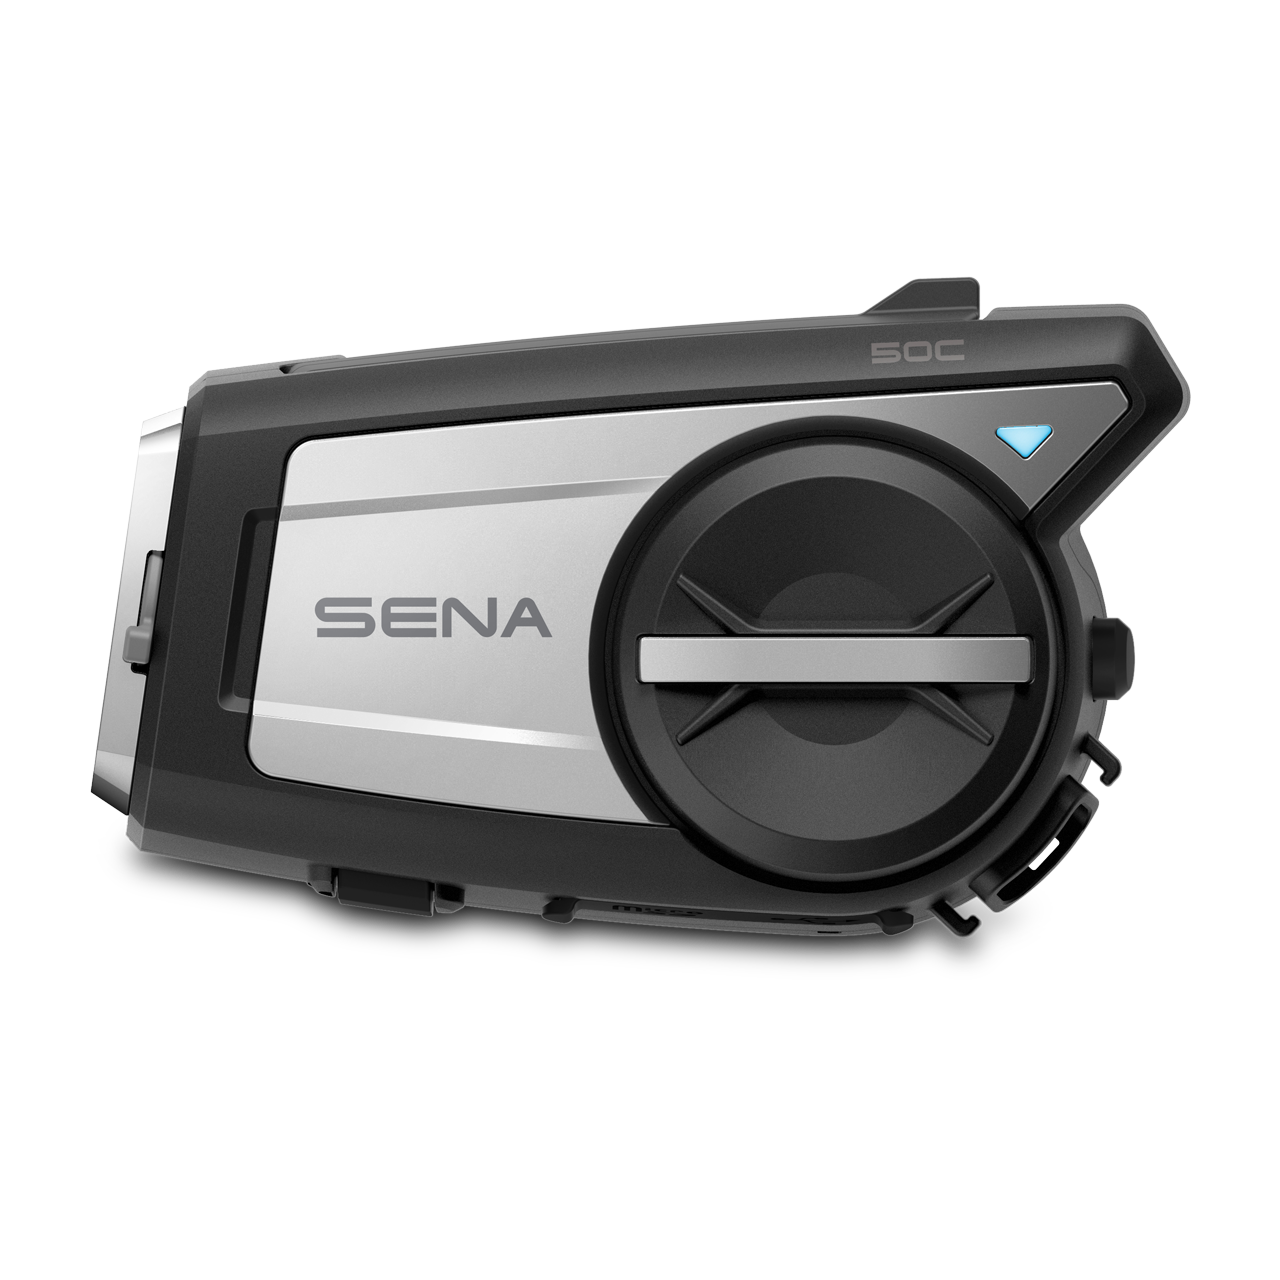 Sena 50C Mesh Action Camera By Harman Kardon 4k Intercom - Now 13% Savings